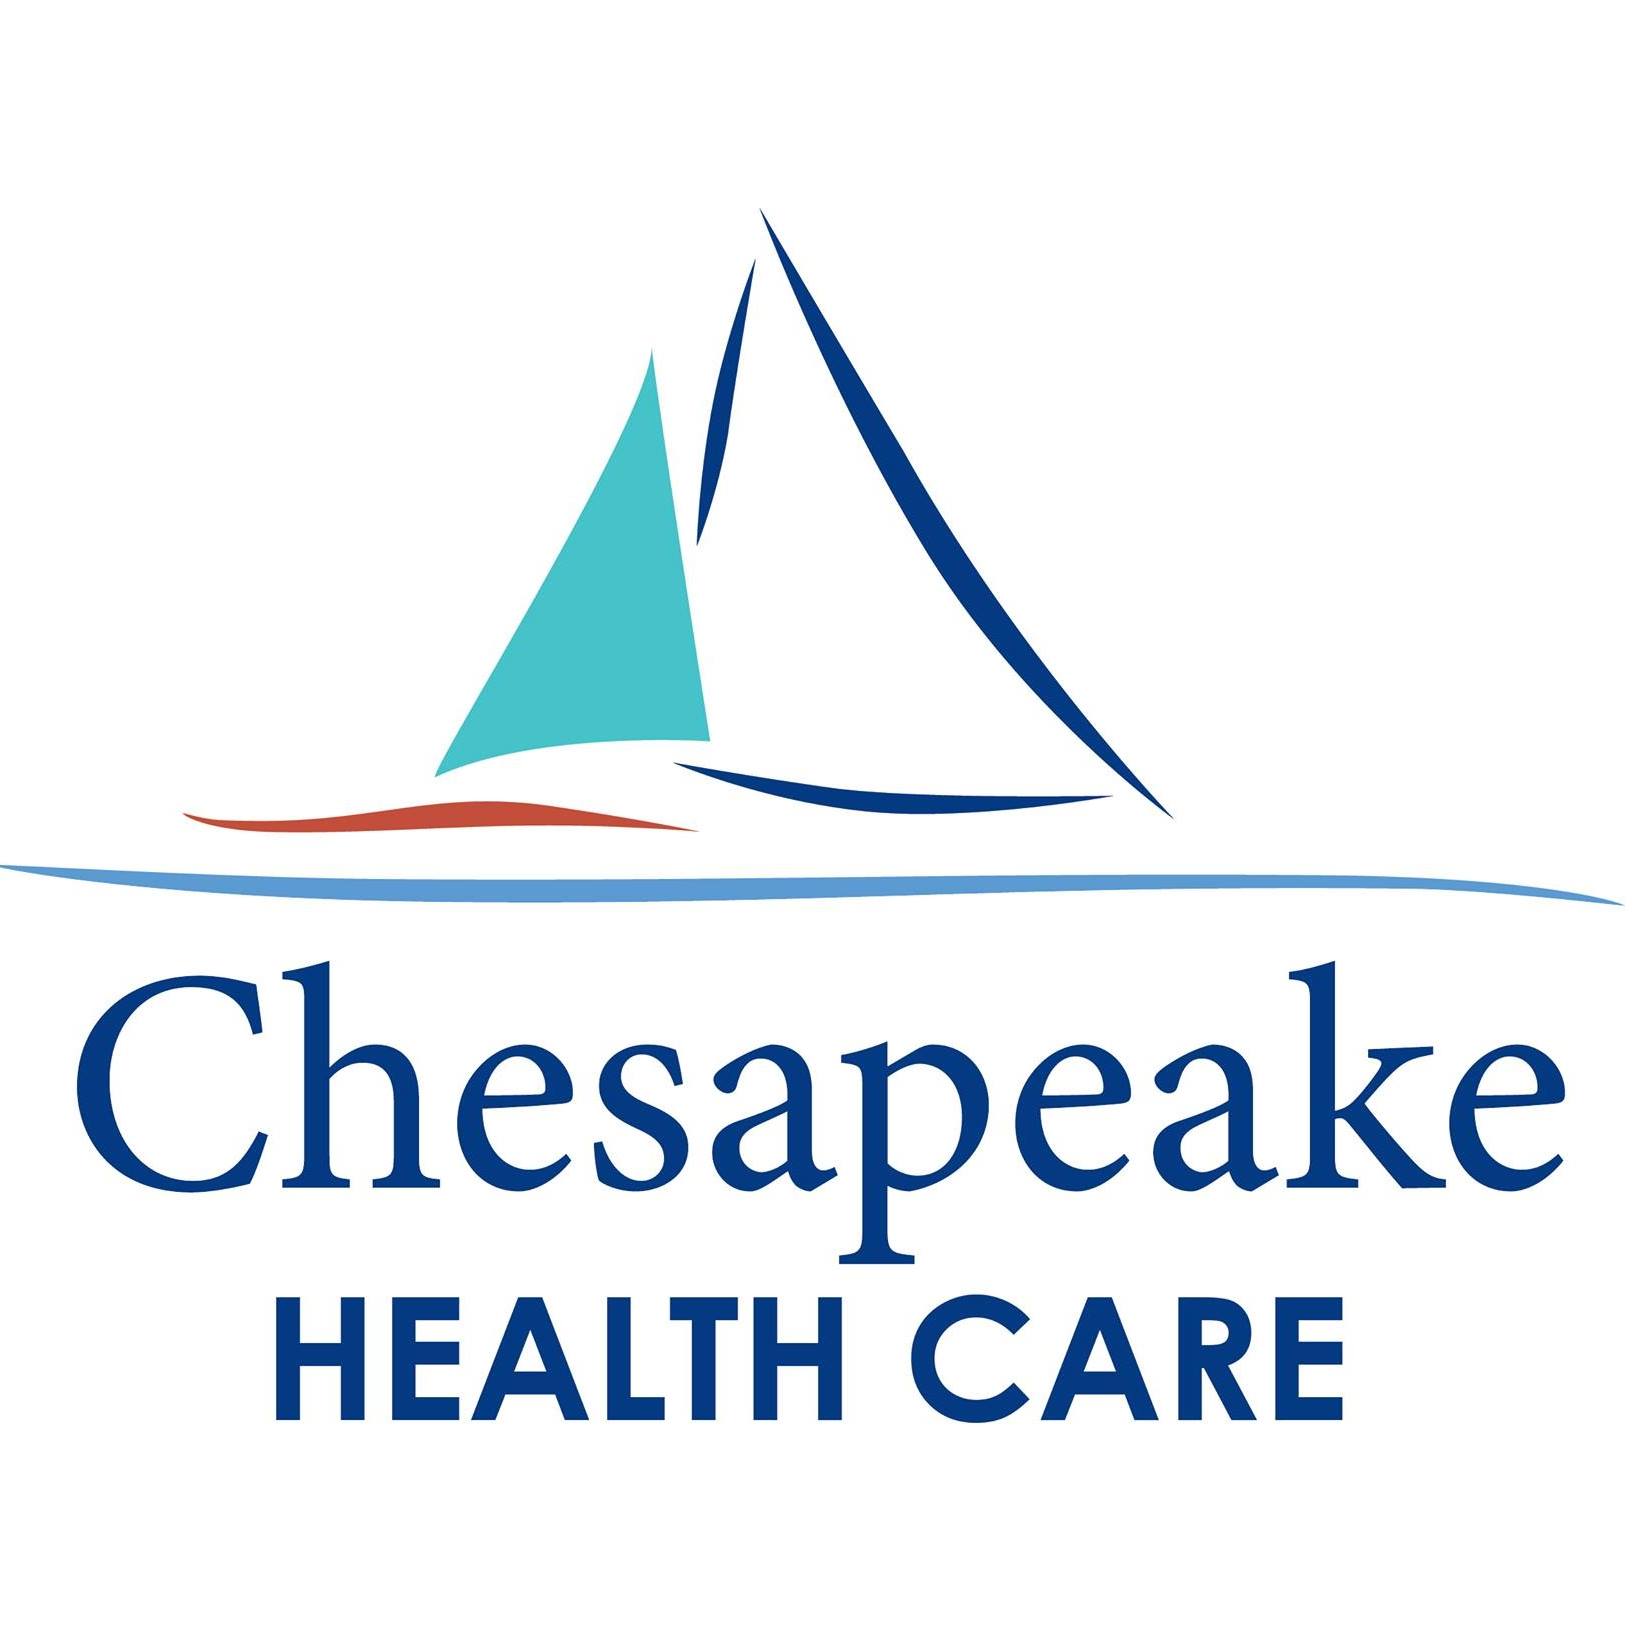 Chesapeake Health Care - Berlin